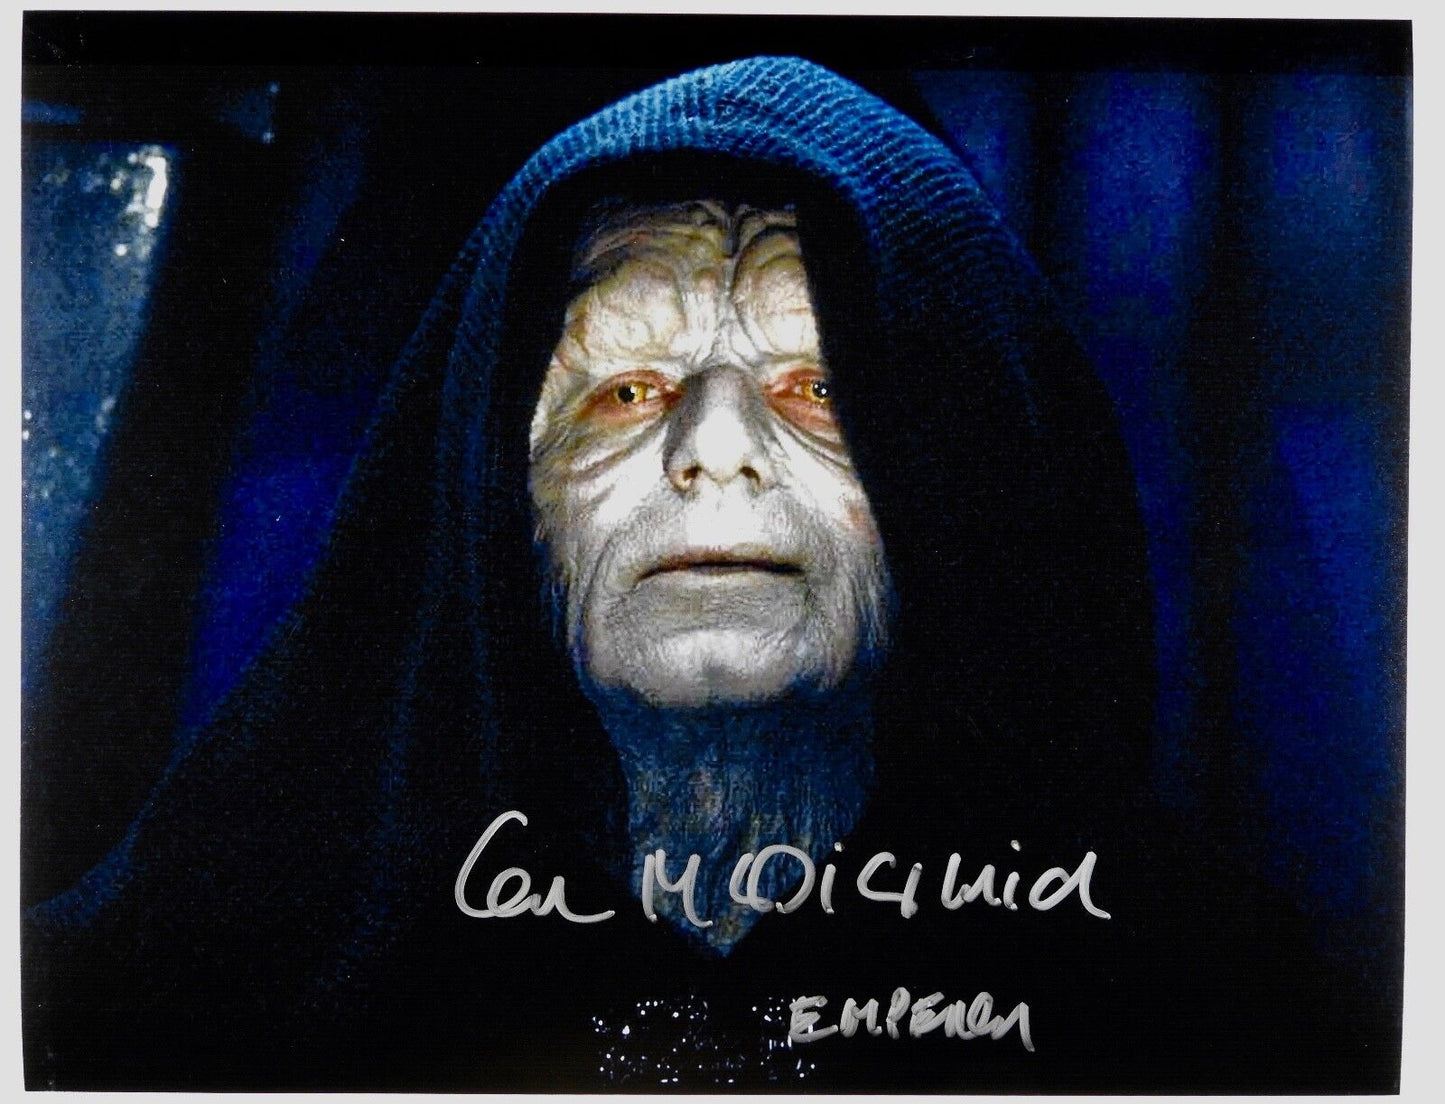 Star Wars Ian McDiarmid Emperor Palpatine Autograph Signed Photo JSA 11 x 14